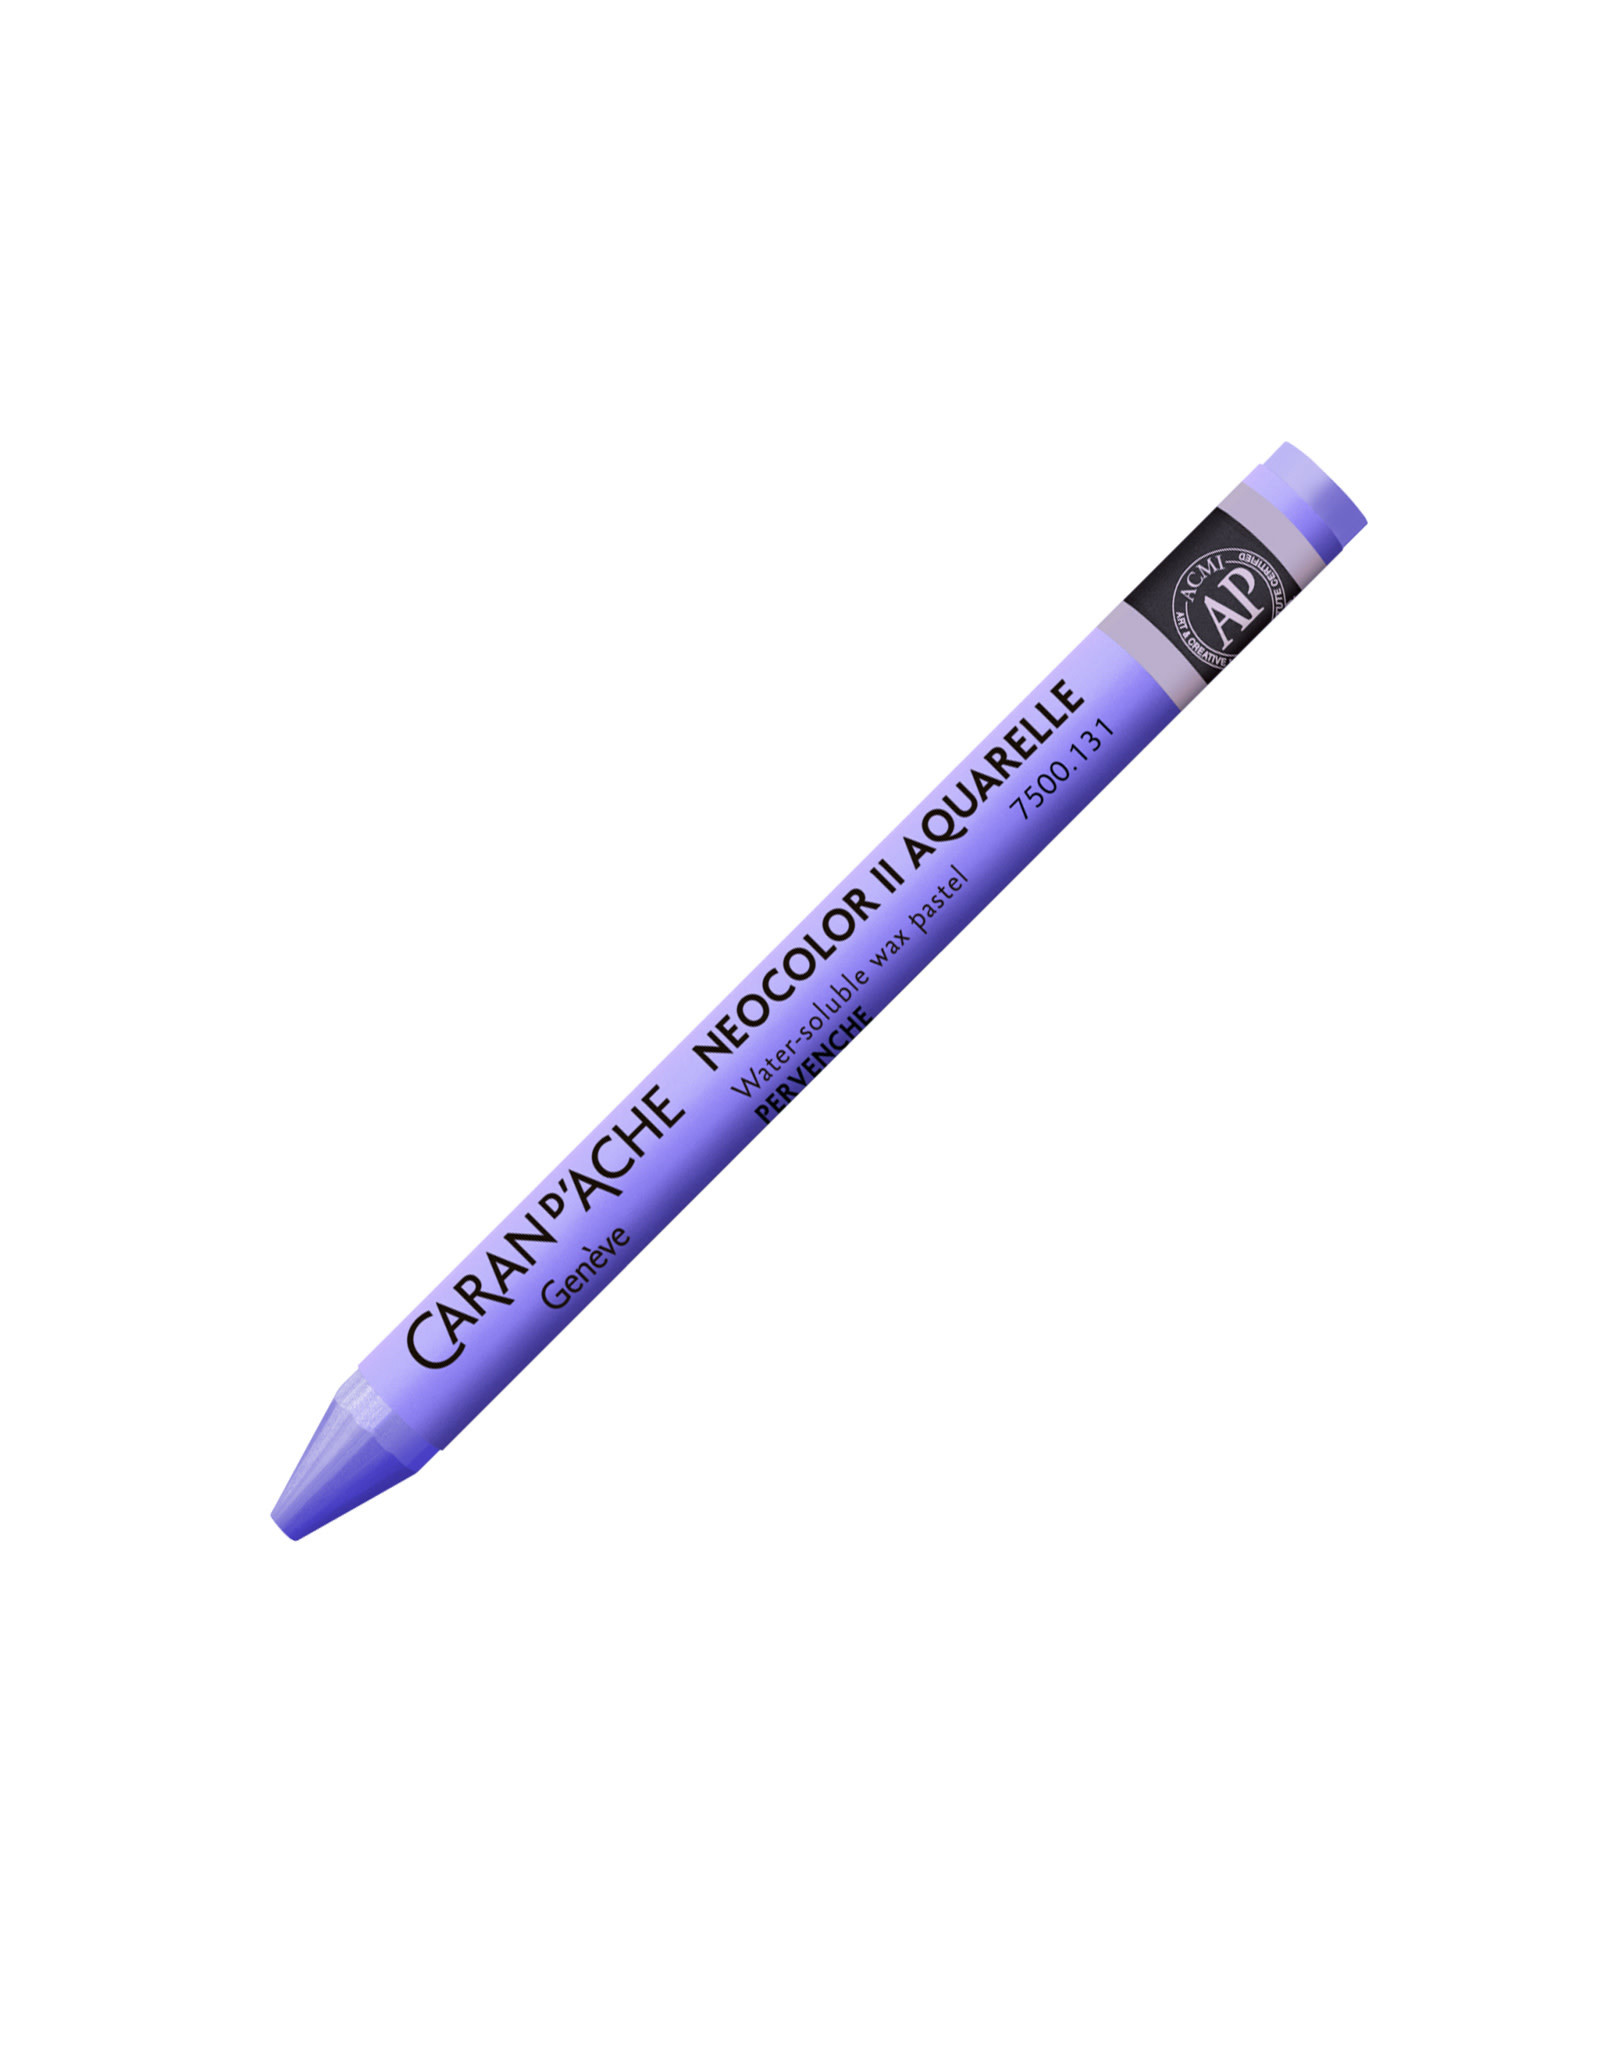 Caran d'Ache Neocolor II Crayons Periwinkle Blue